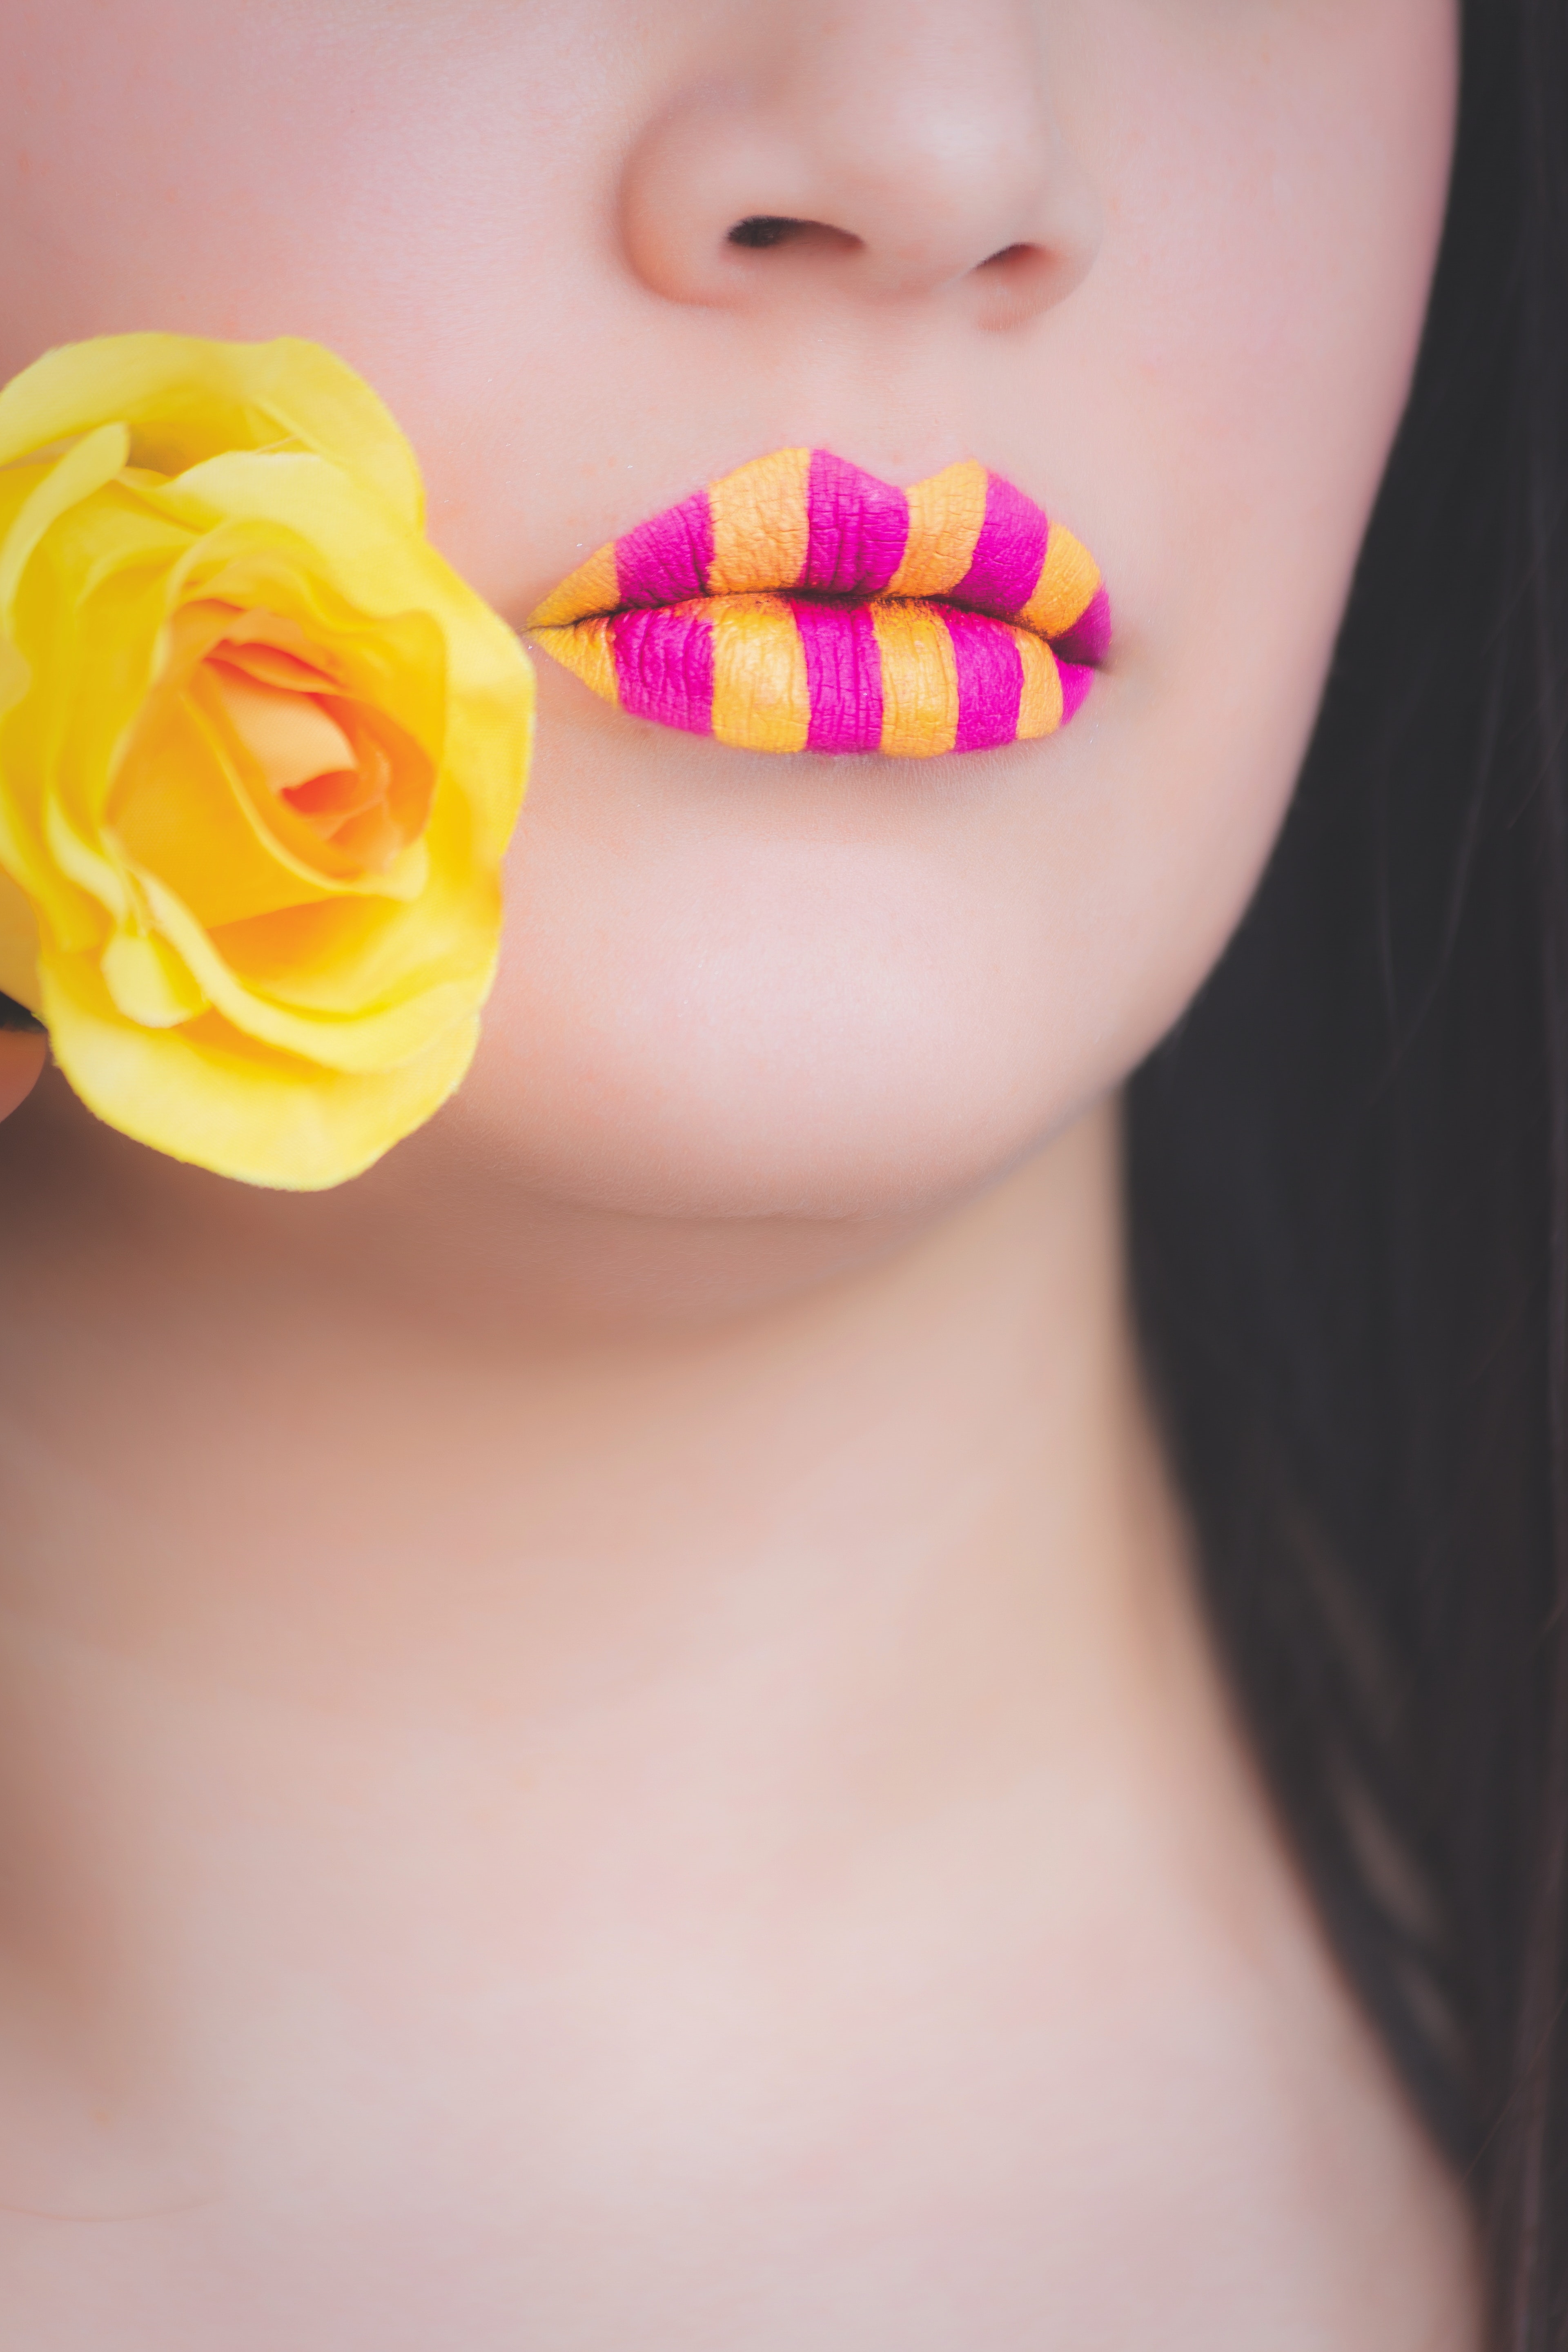 Woman wearing yellow and pink striped lipstick holding yellow rose photo